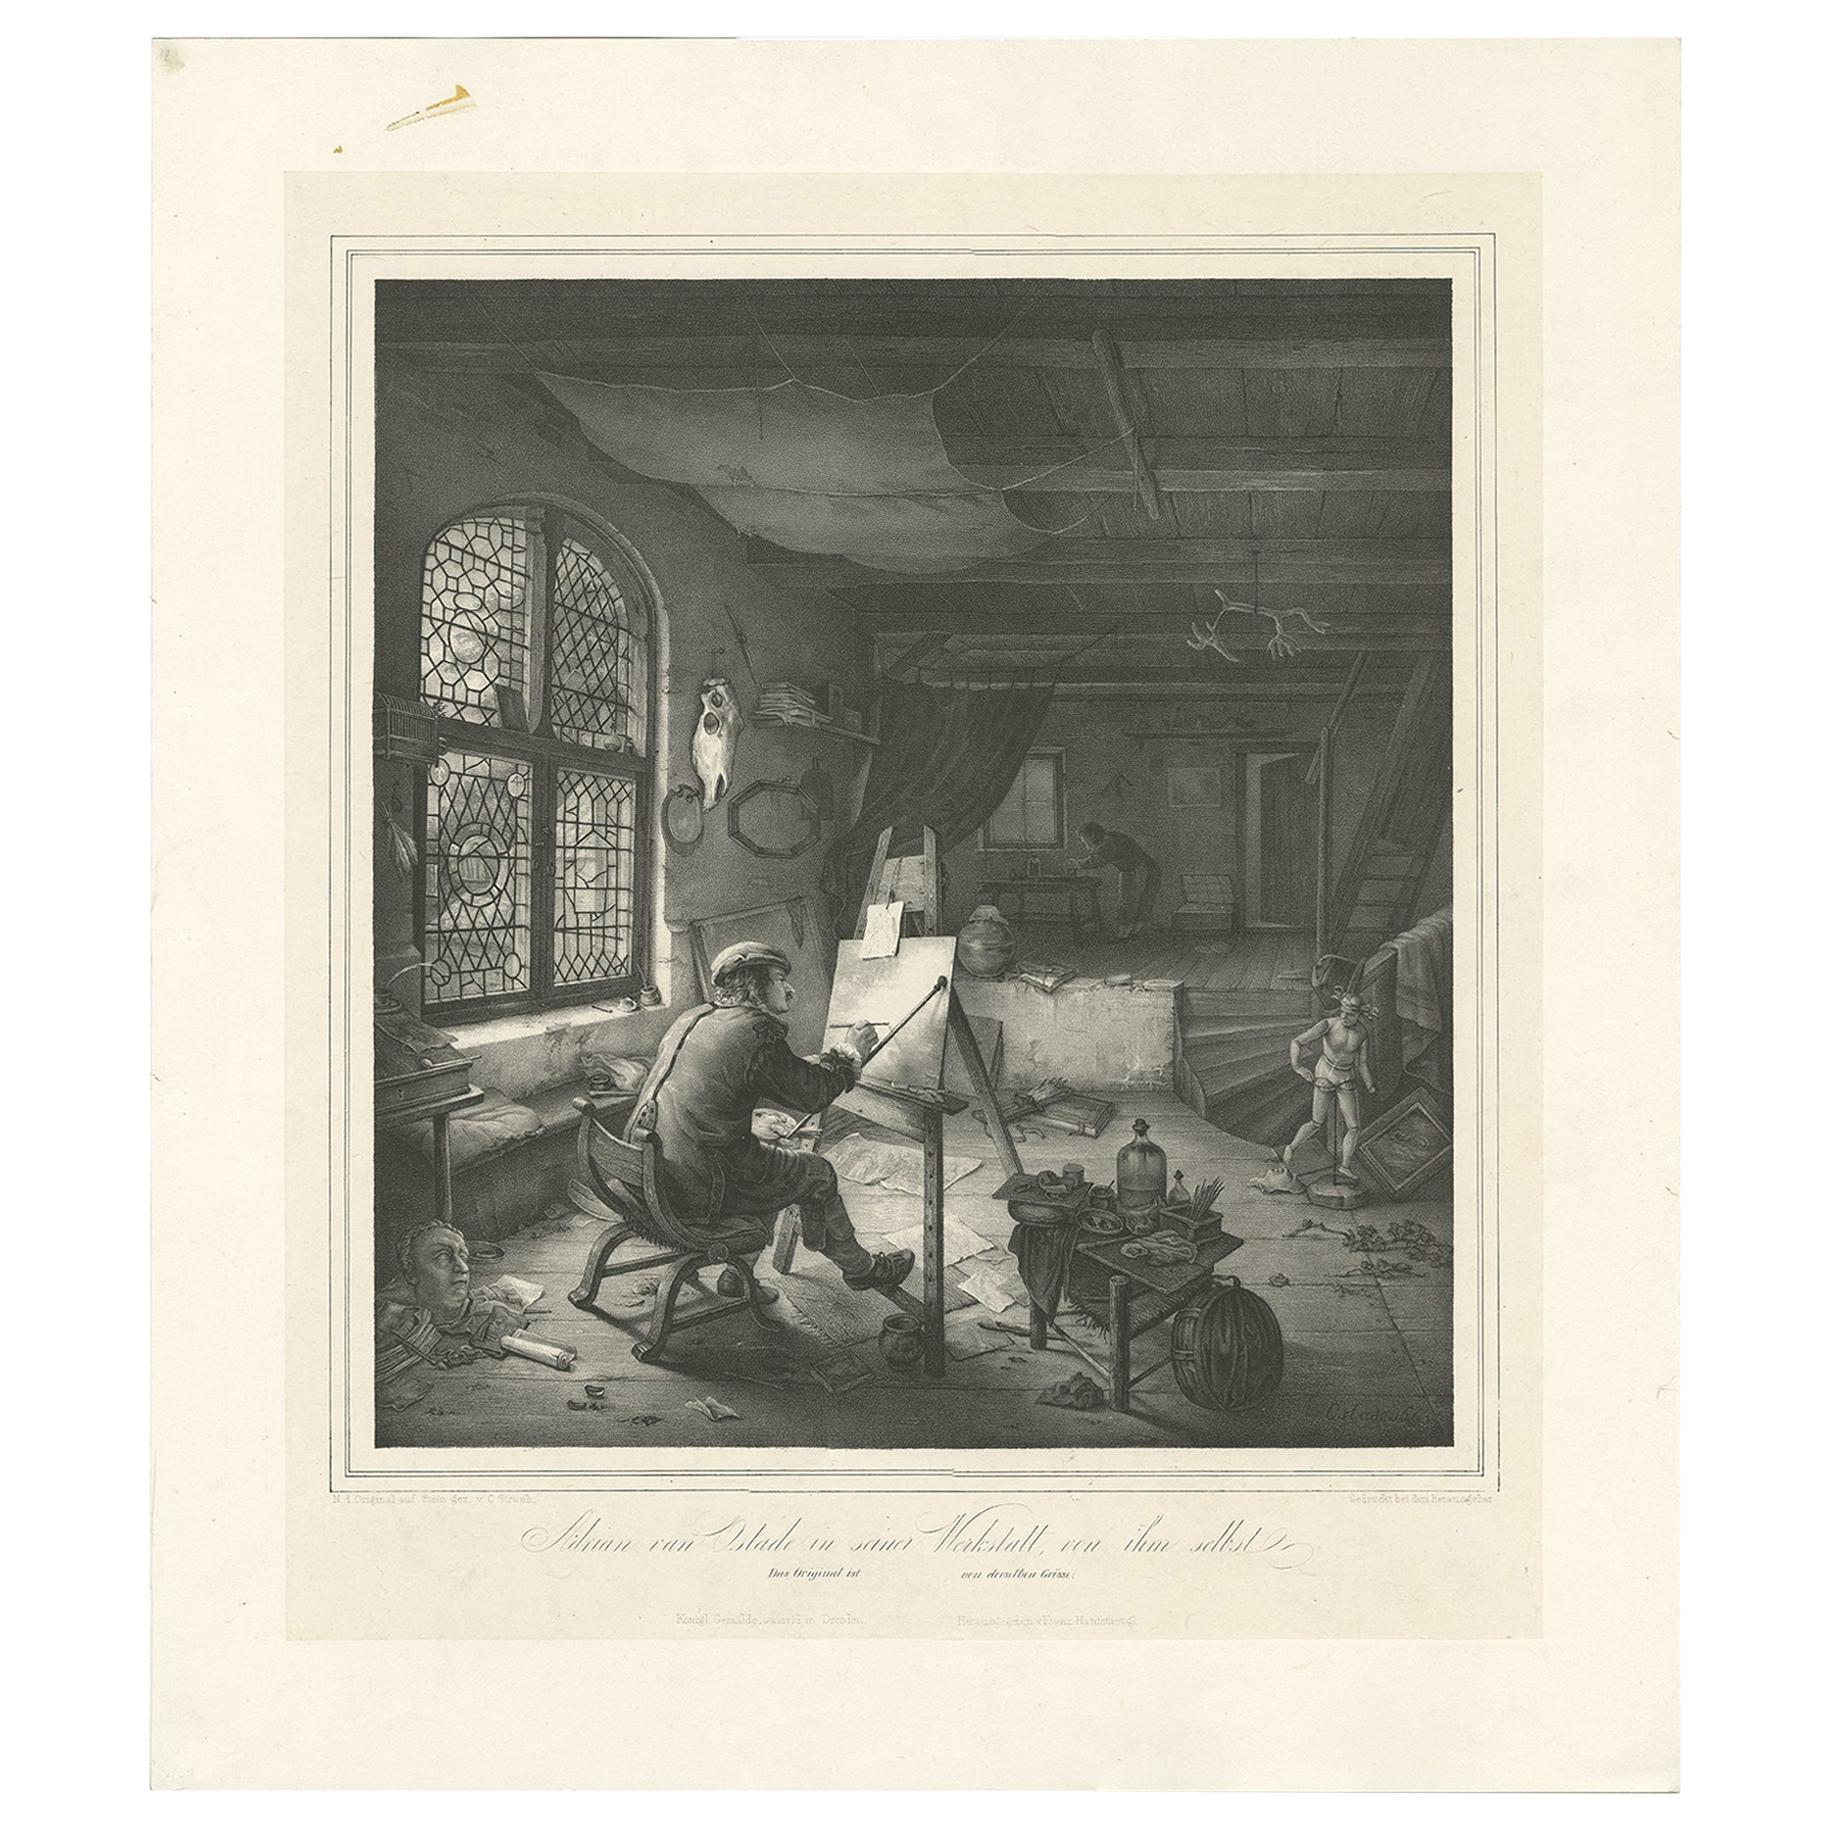 Antique Print of the Painter Adriaen van Ostade in His Workshop 'circa 1840'